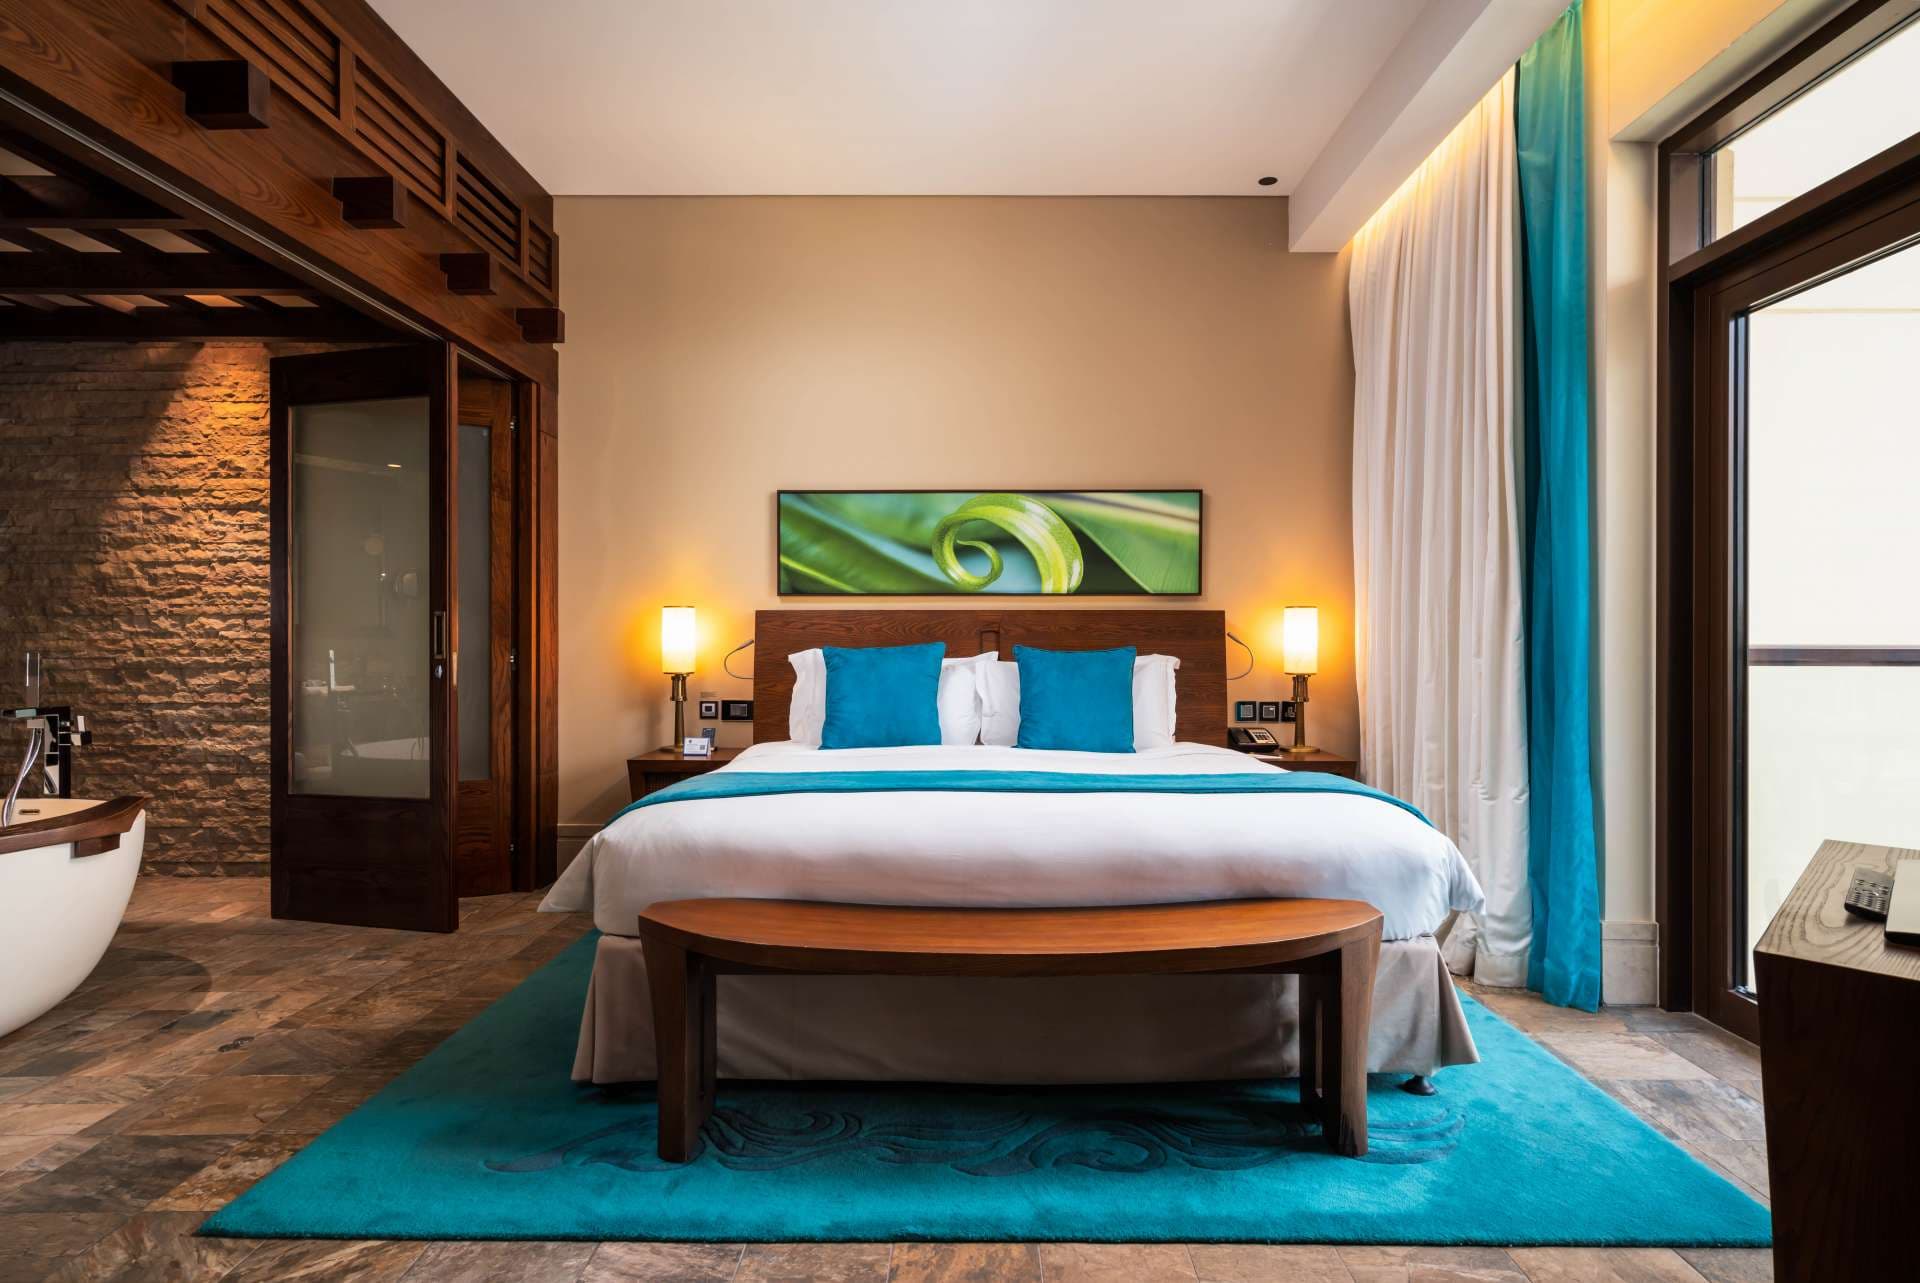 1 Bedroom Apartment For Rent Sofitel Dubai The Palm Lp04963 17bdc32c84500d0.jpg